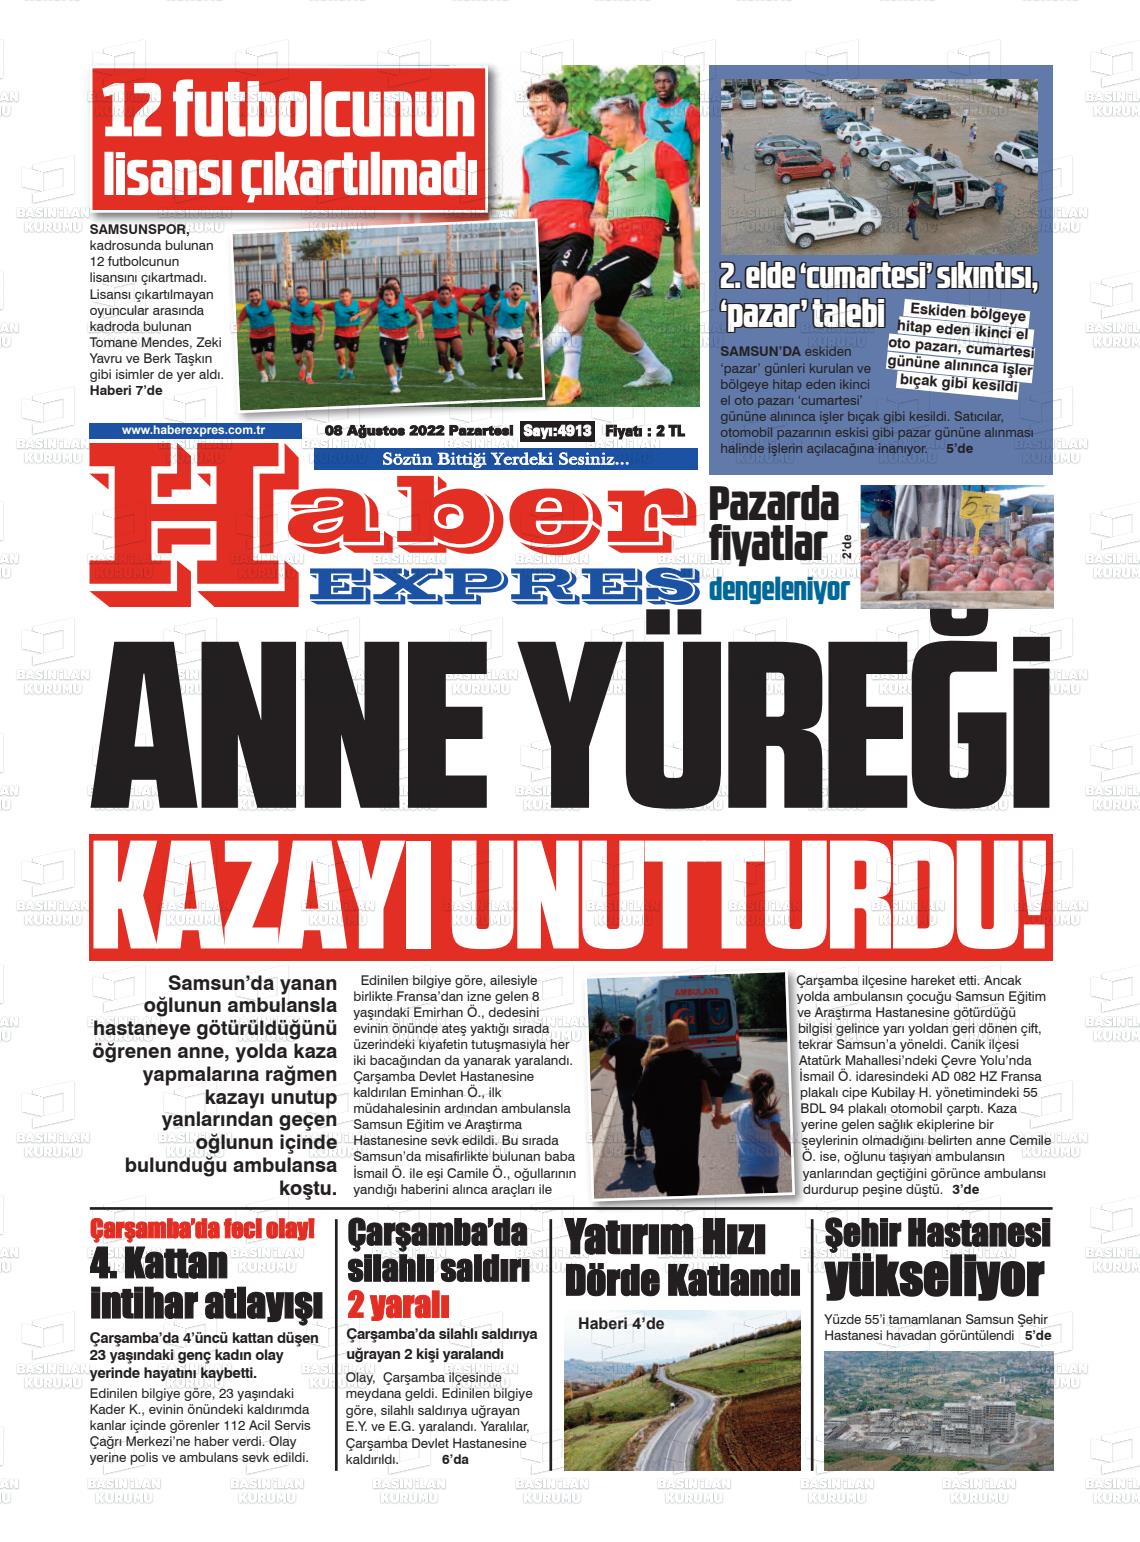 08 Ağustos 2022 Haber Expres Gazete Manşeti